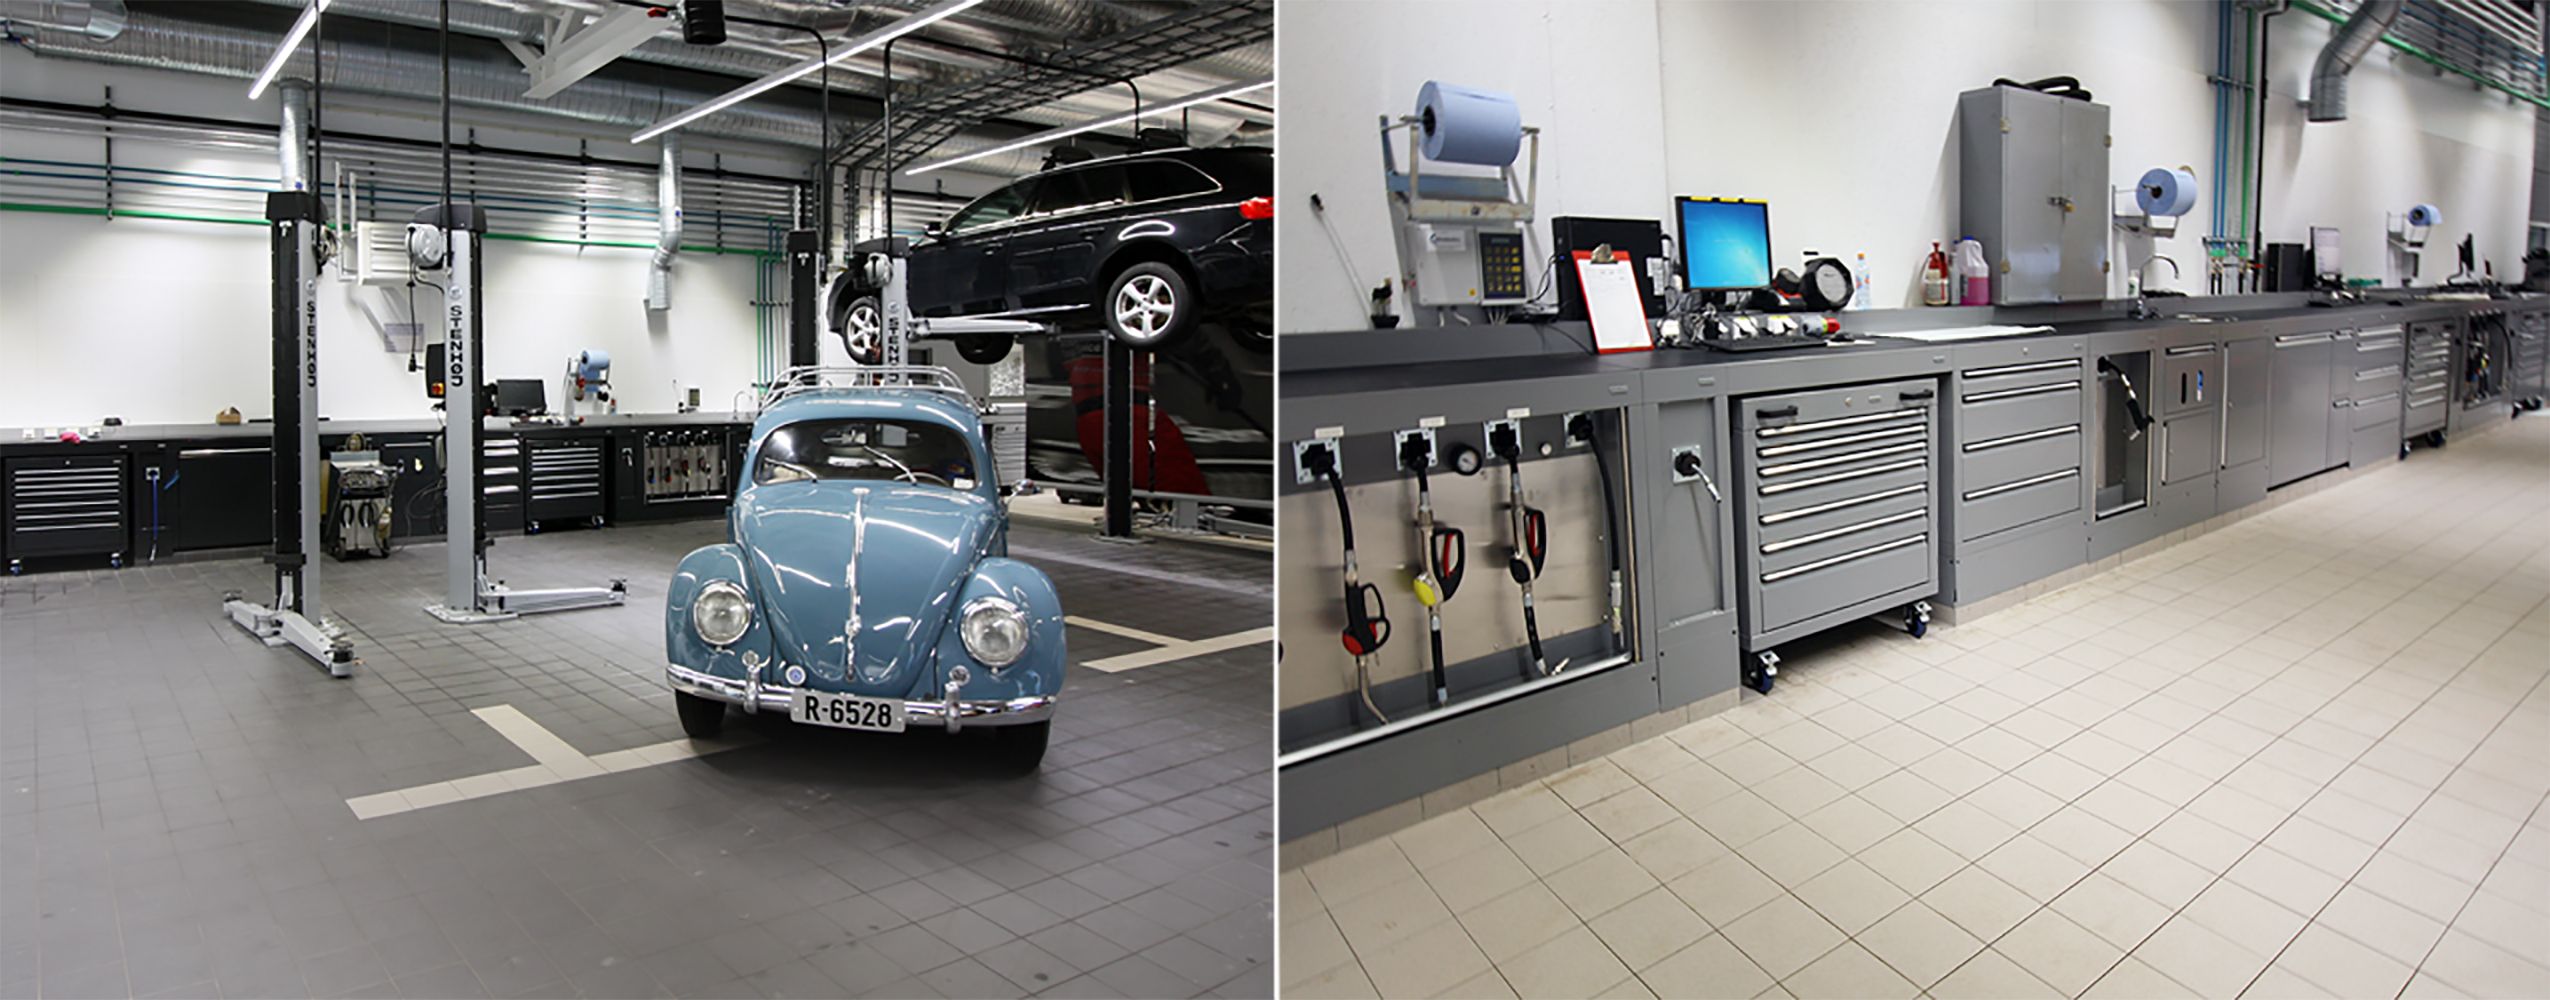 Automotive installations by Dura Ltd